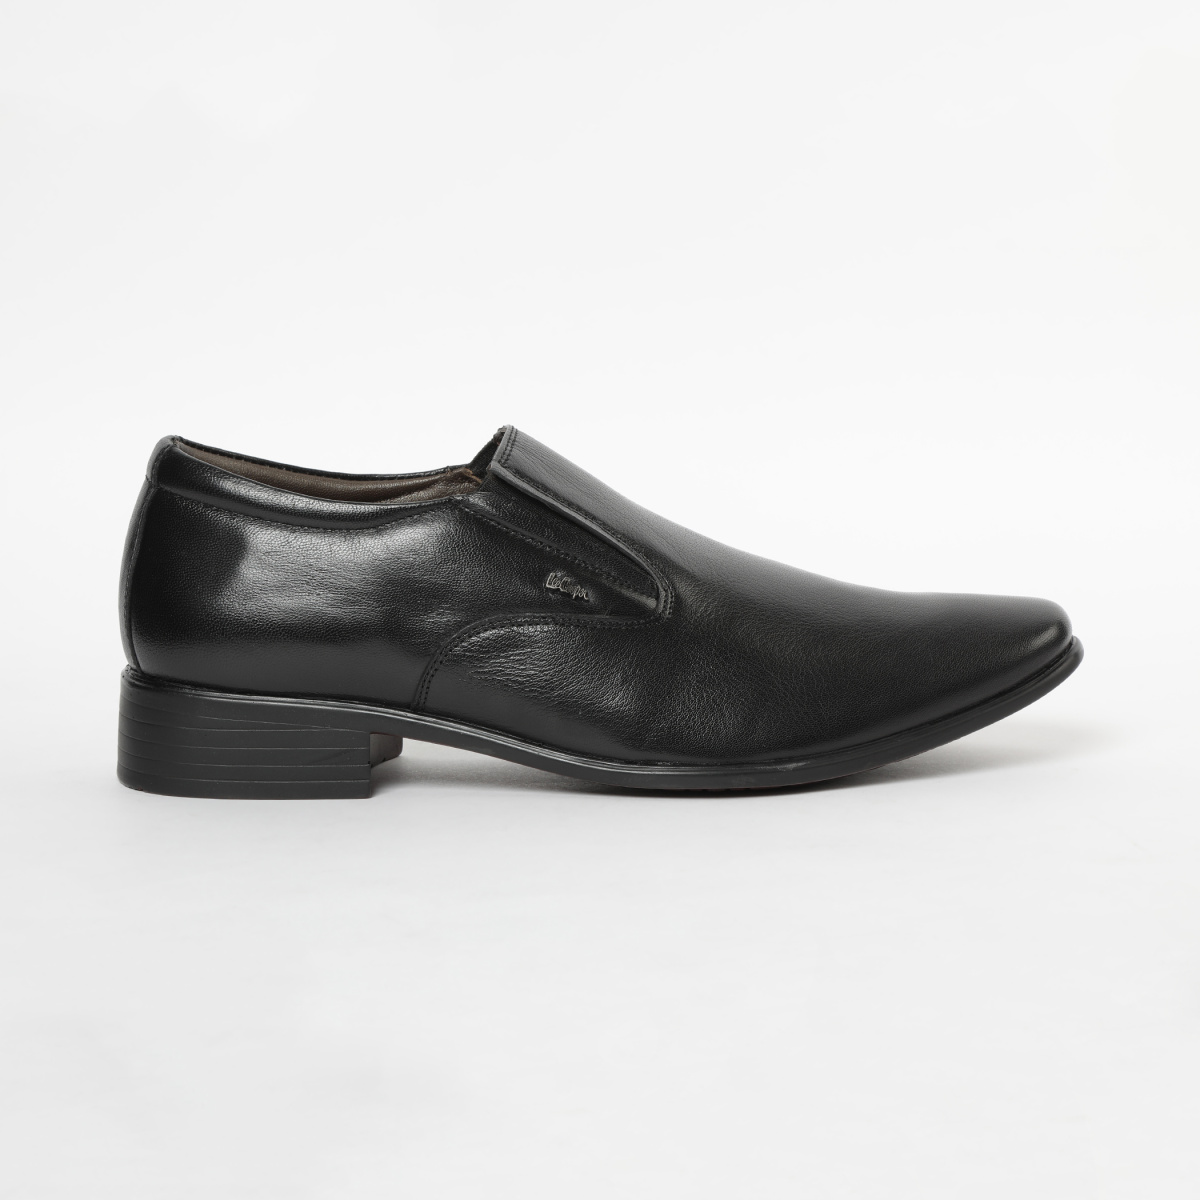 LEE COOPER Genuine Leather Slip-On Formal Shoes